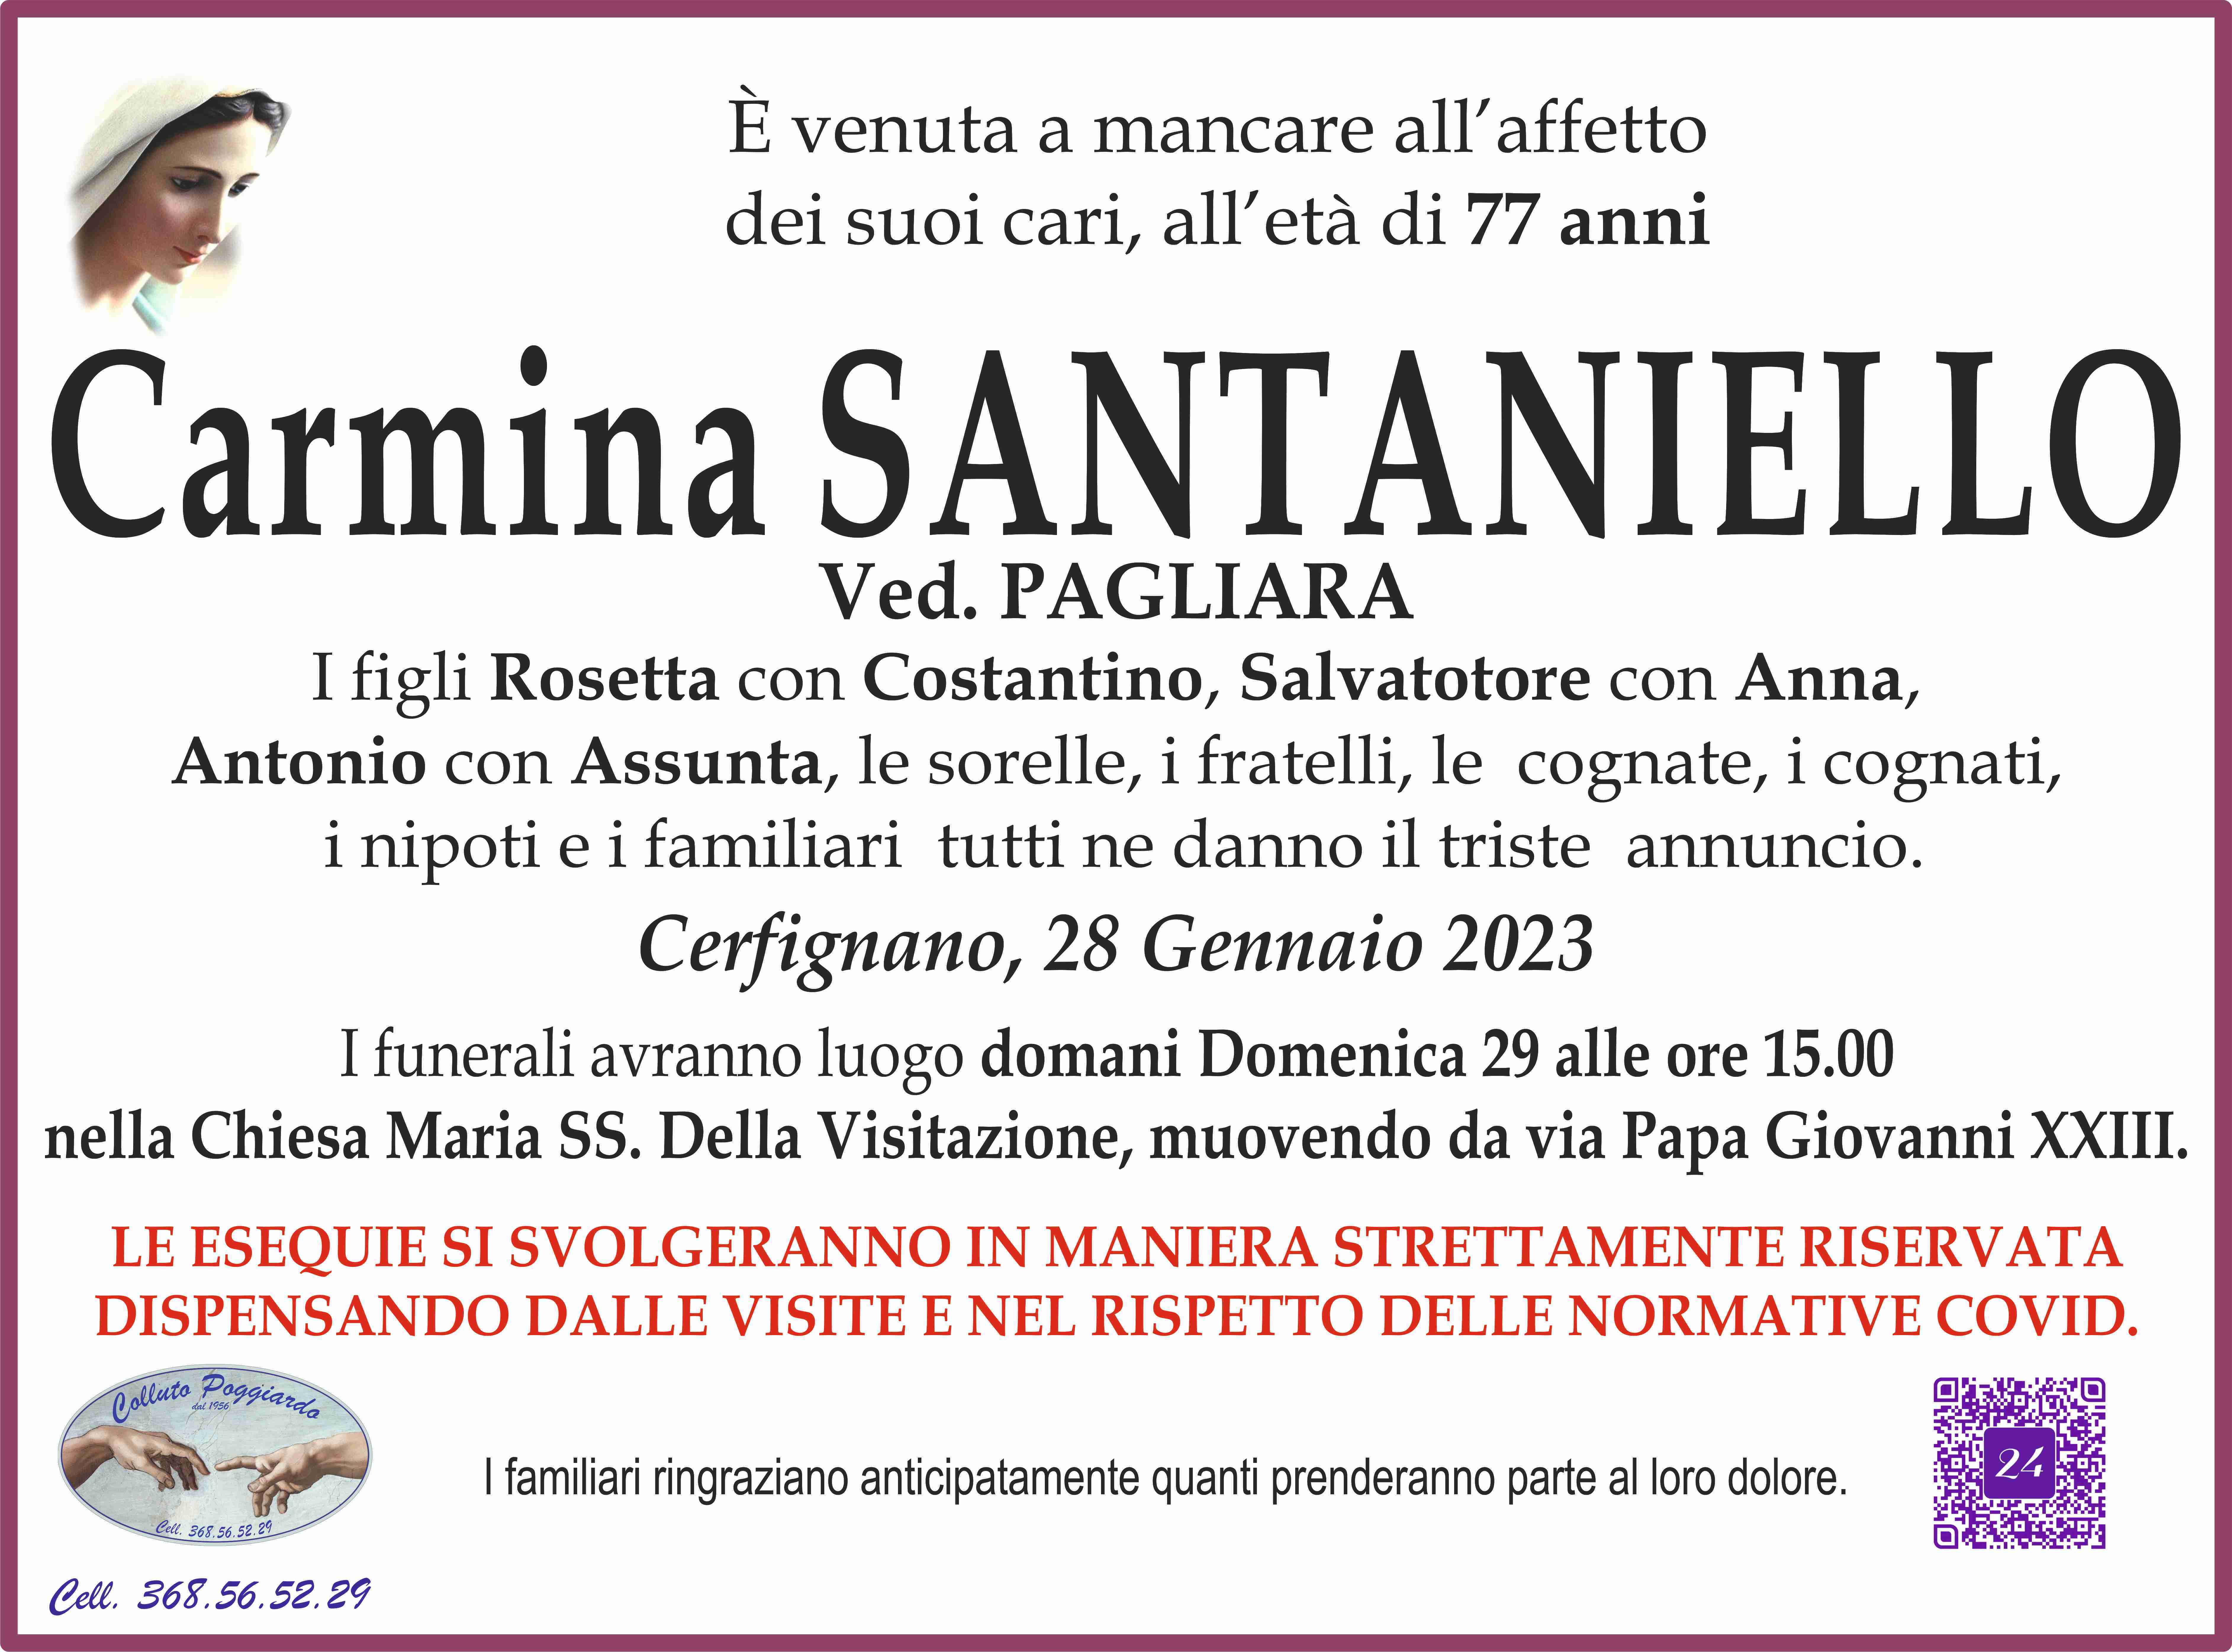 Carmina Santaniello